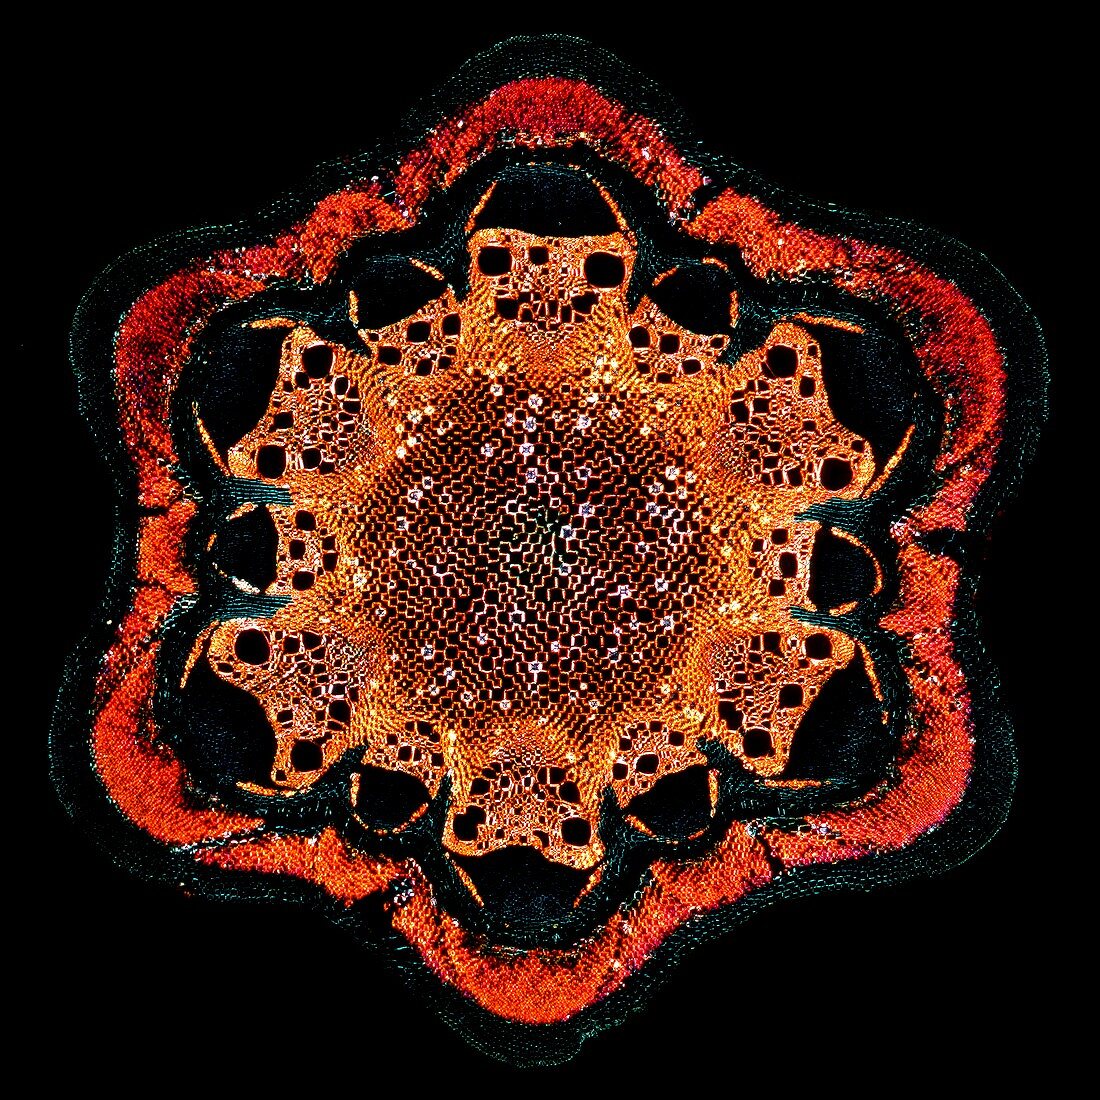 Clematis stem,light micrograph